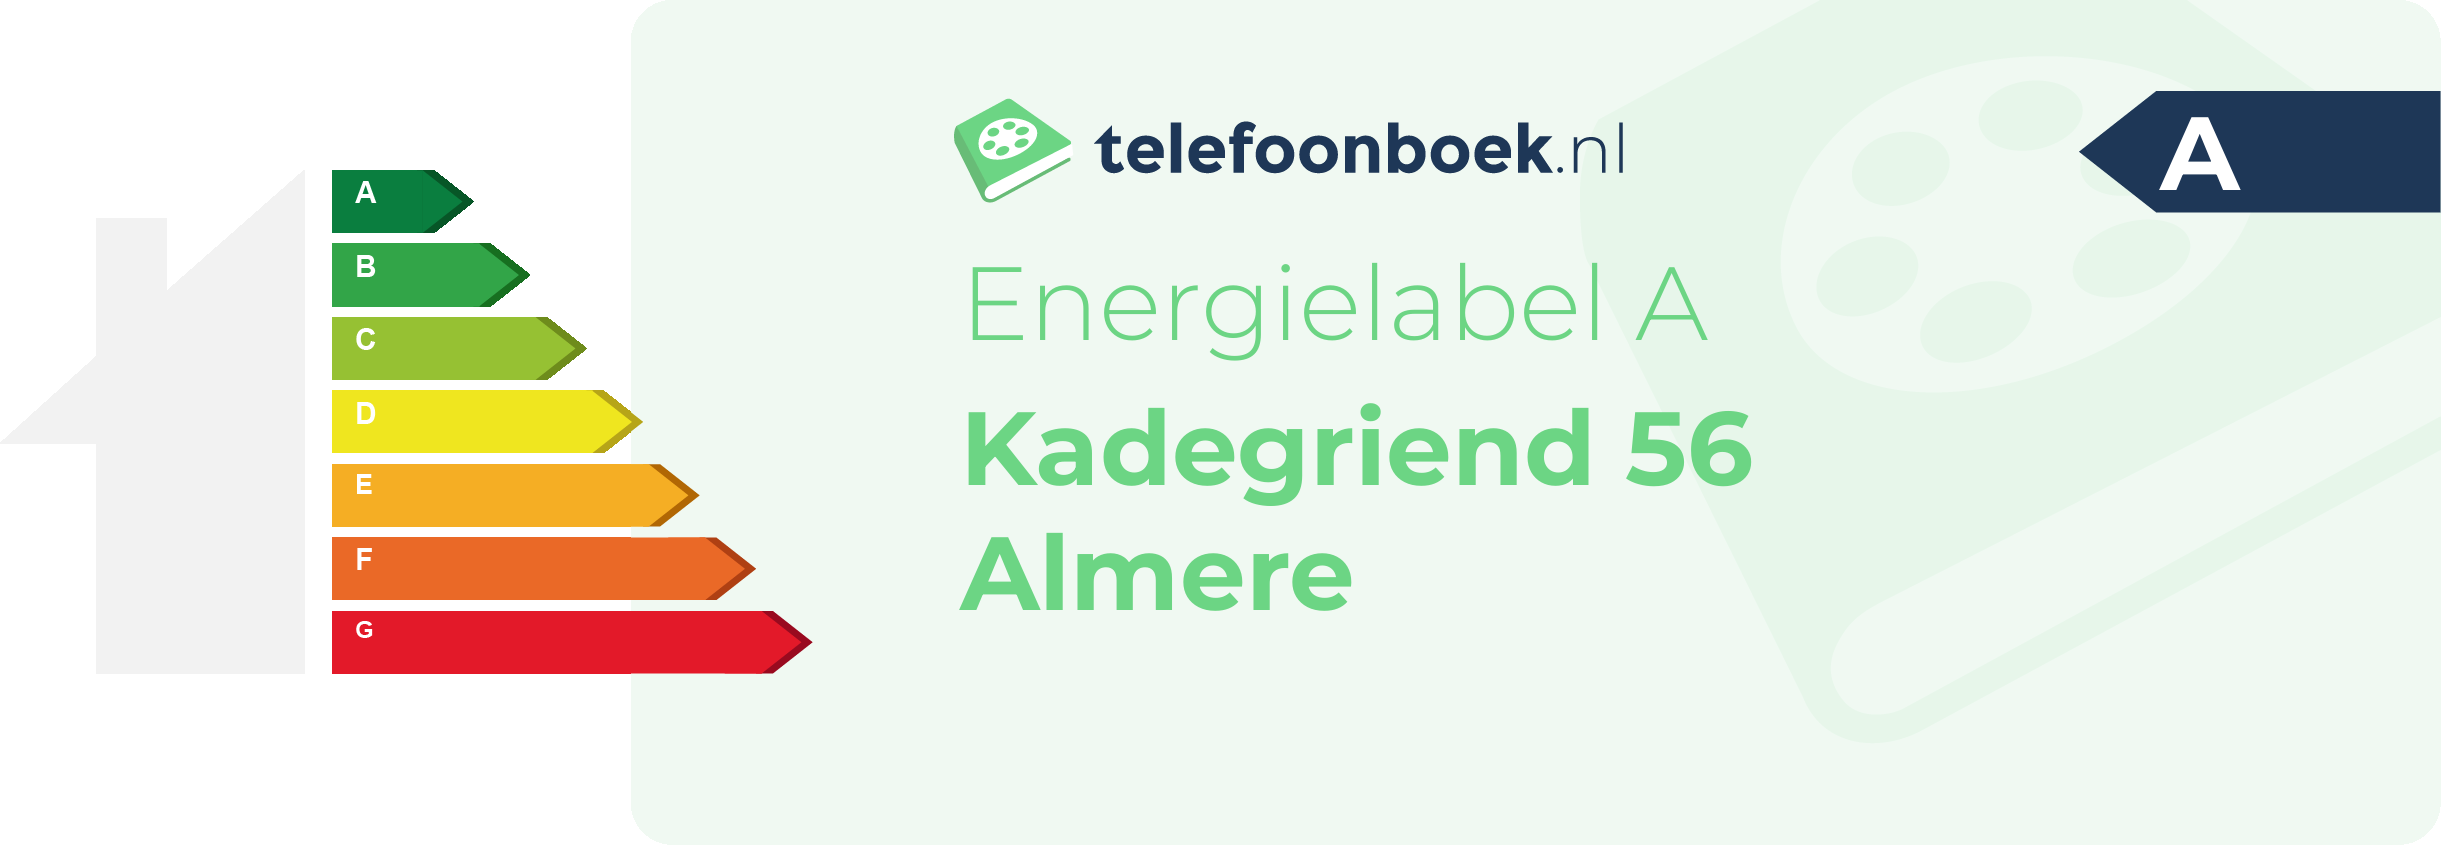 Energielabel Kadegriend 56 Almere